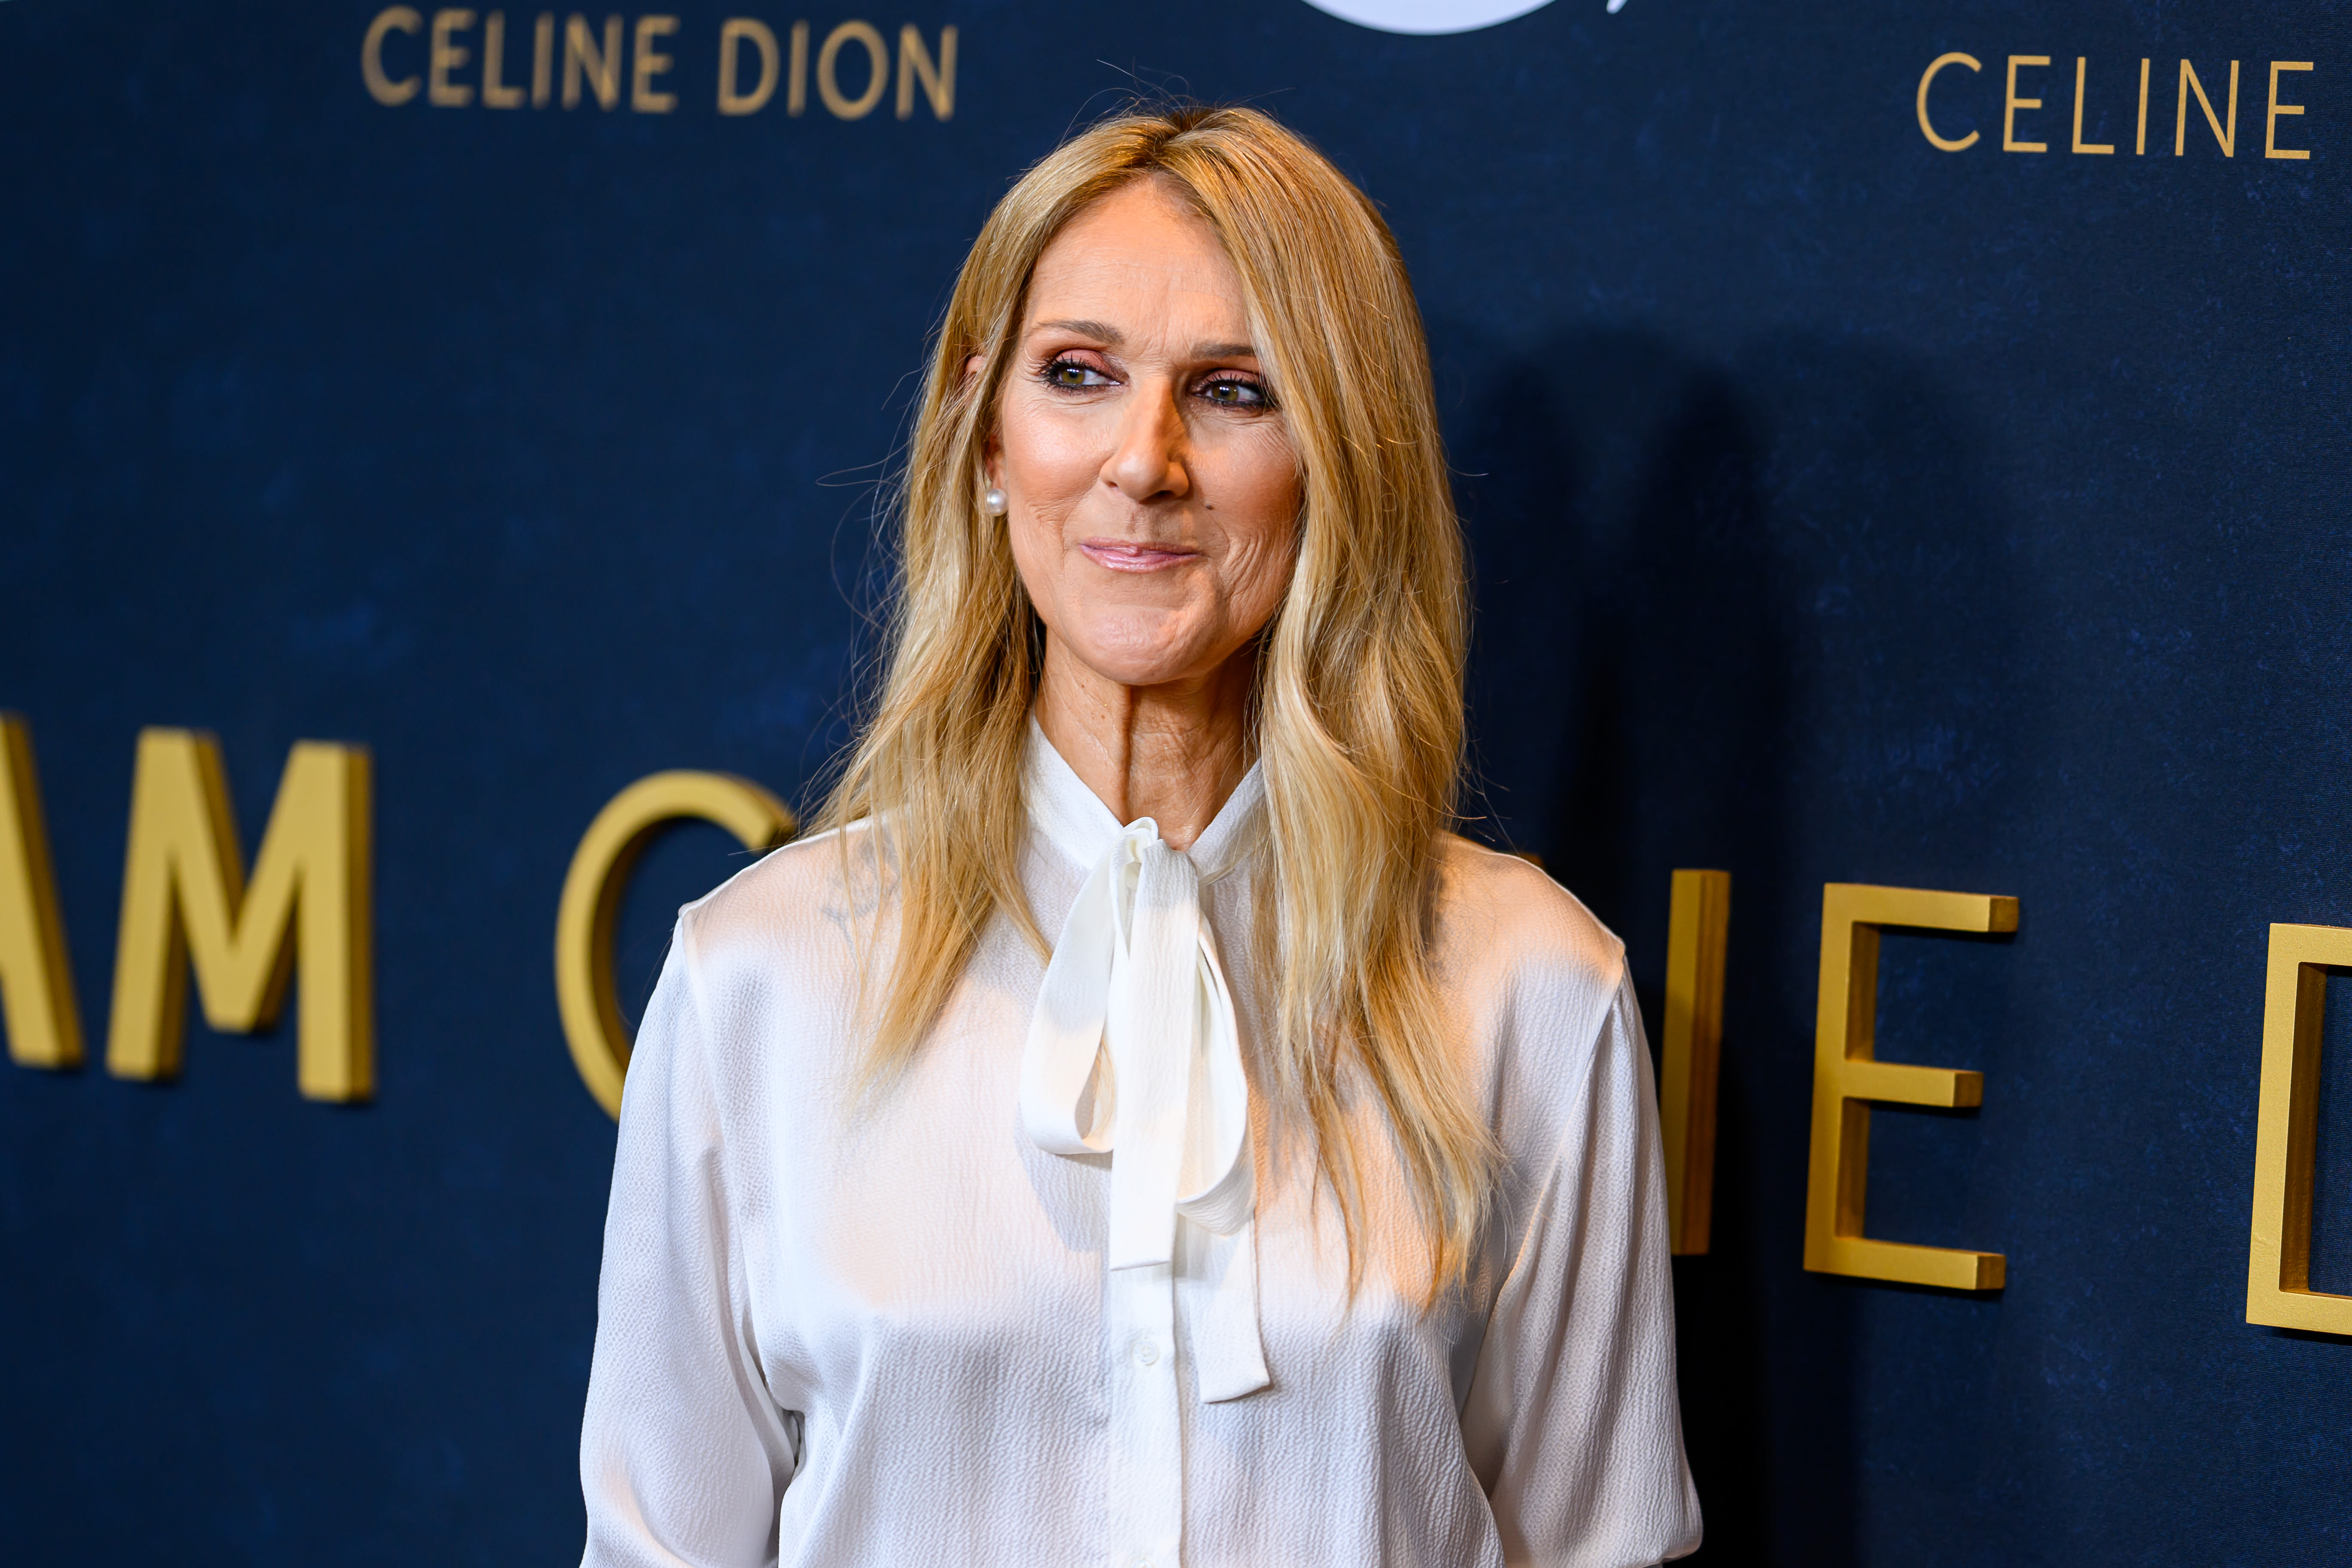 Inside Celine Dion’s rumoured comeback ahead of Paris Olympics